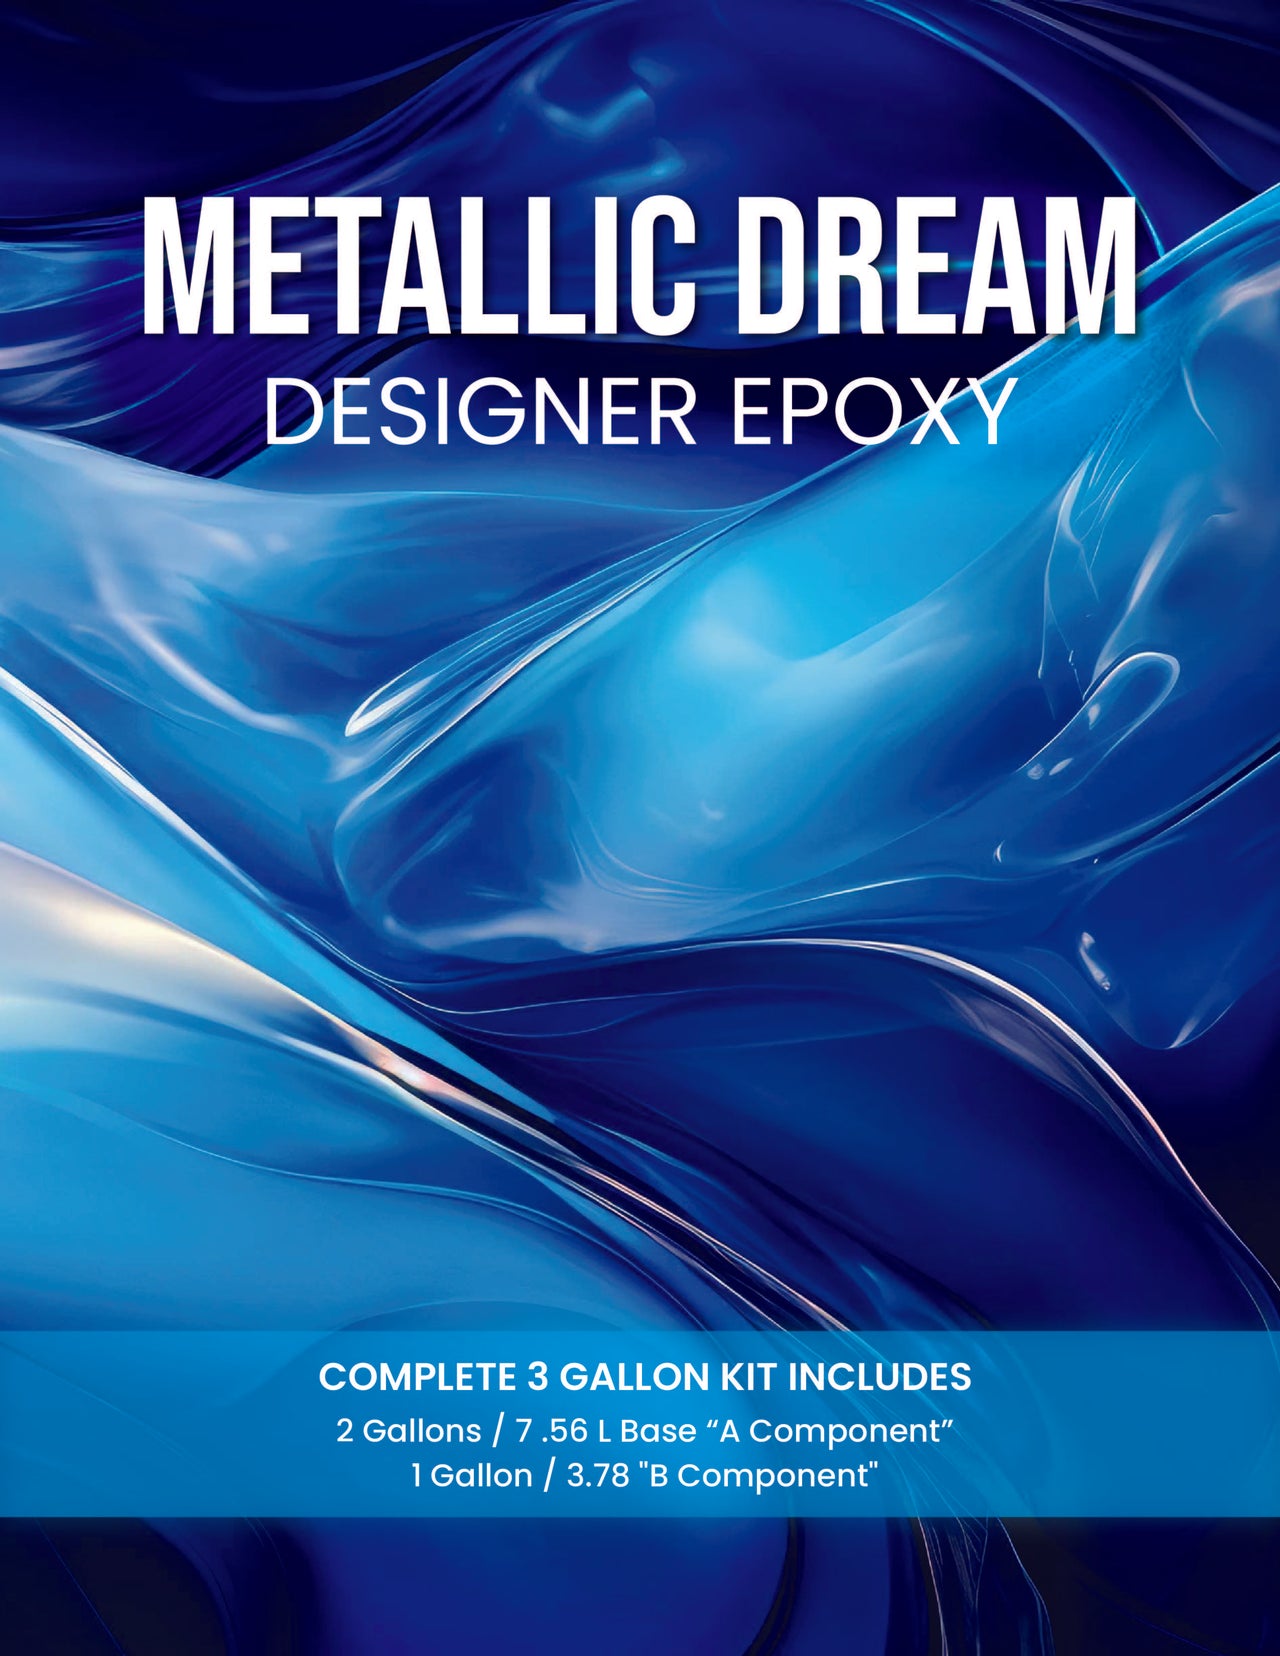 Metallic Dream Epoxy - Complete 3 Gallon Kit